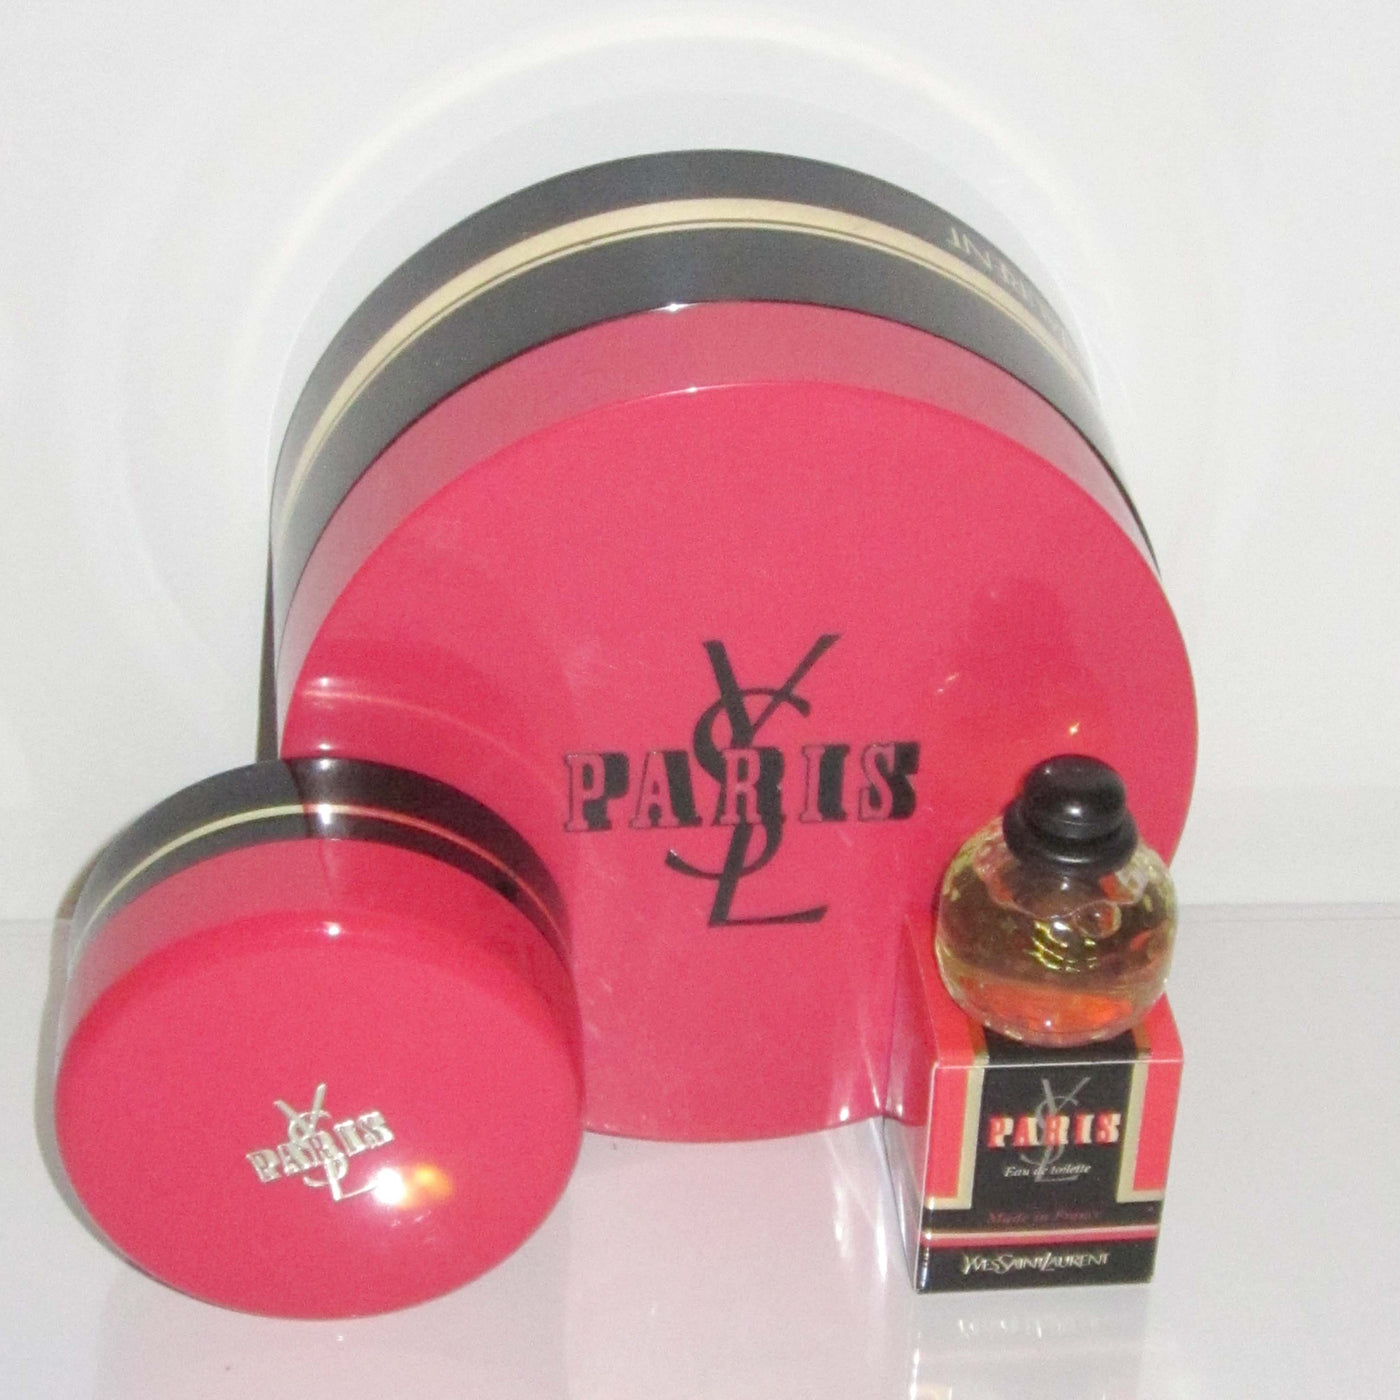 Yves Saint Laurent Paris Perfume Gift Set